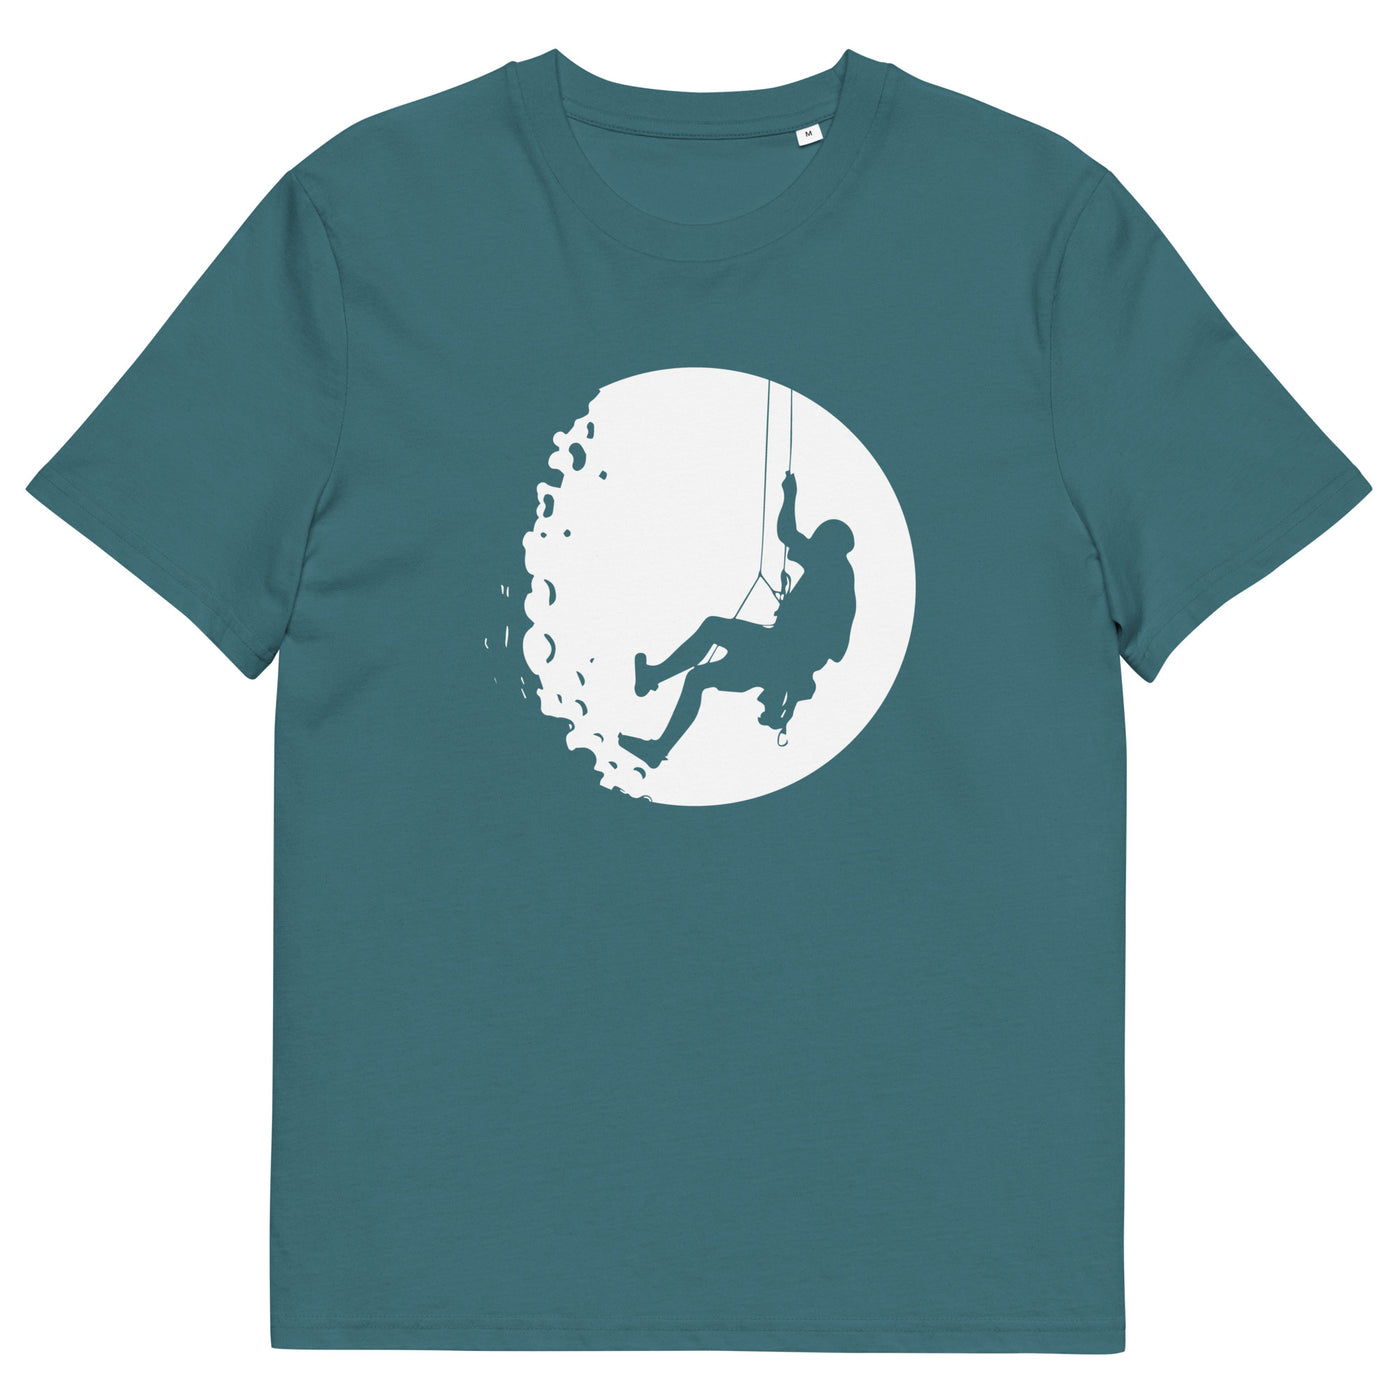 Moon - Klettern - Herren Premium Organic T-Shirt klettern xxx yyy zzz Stargazer